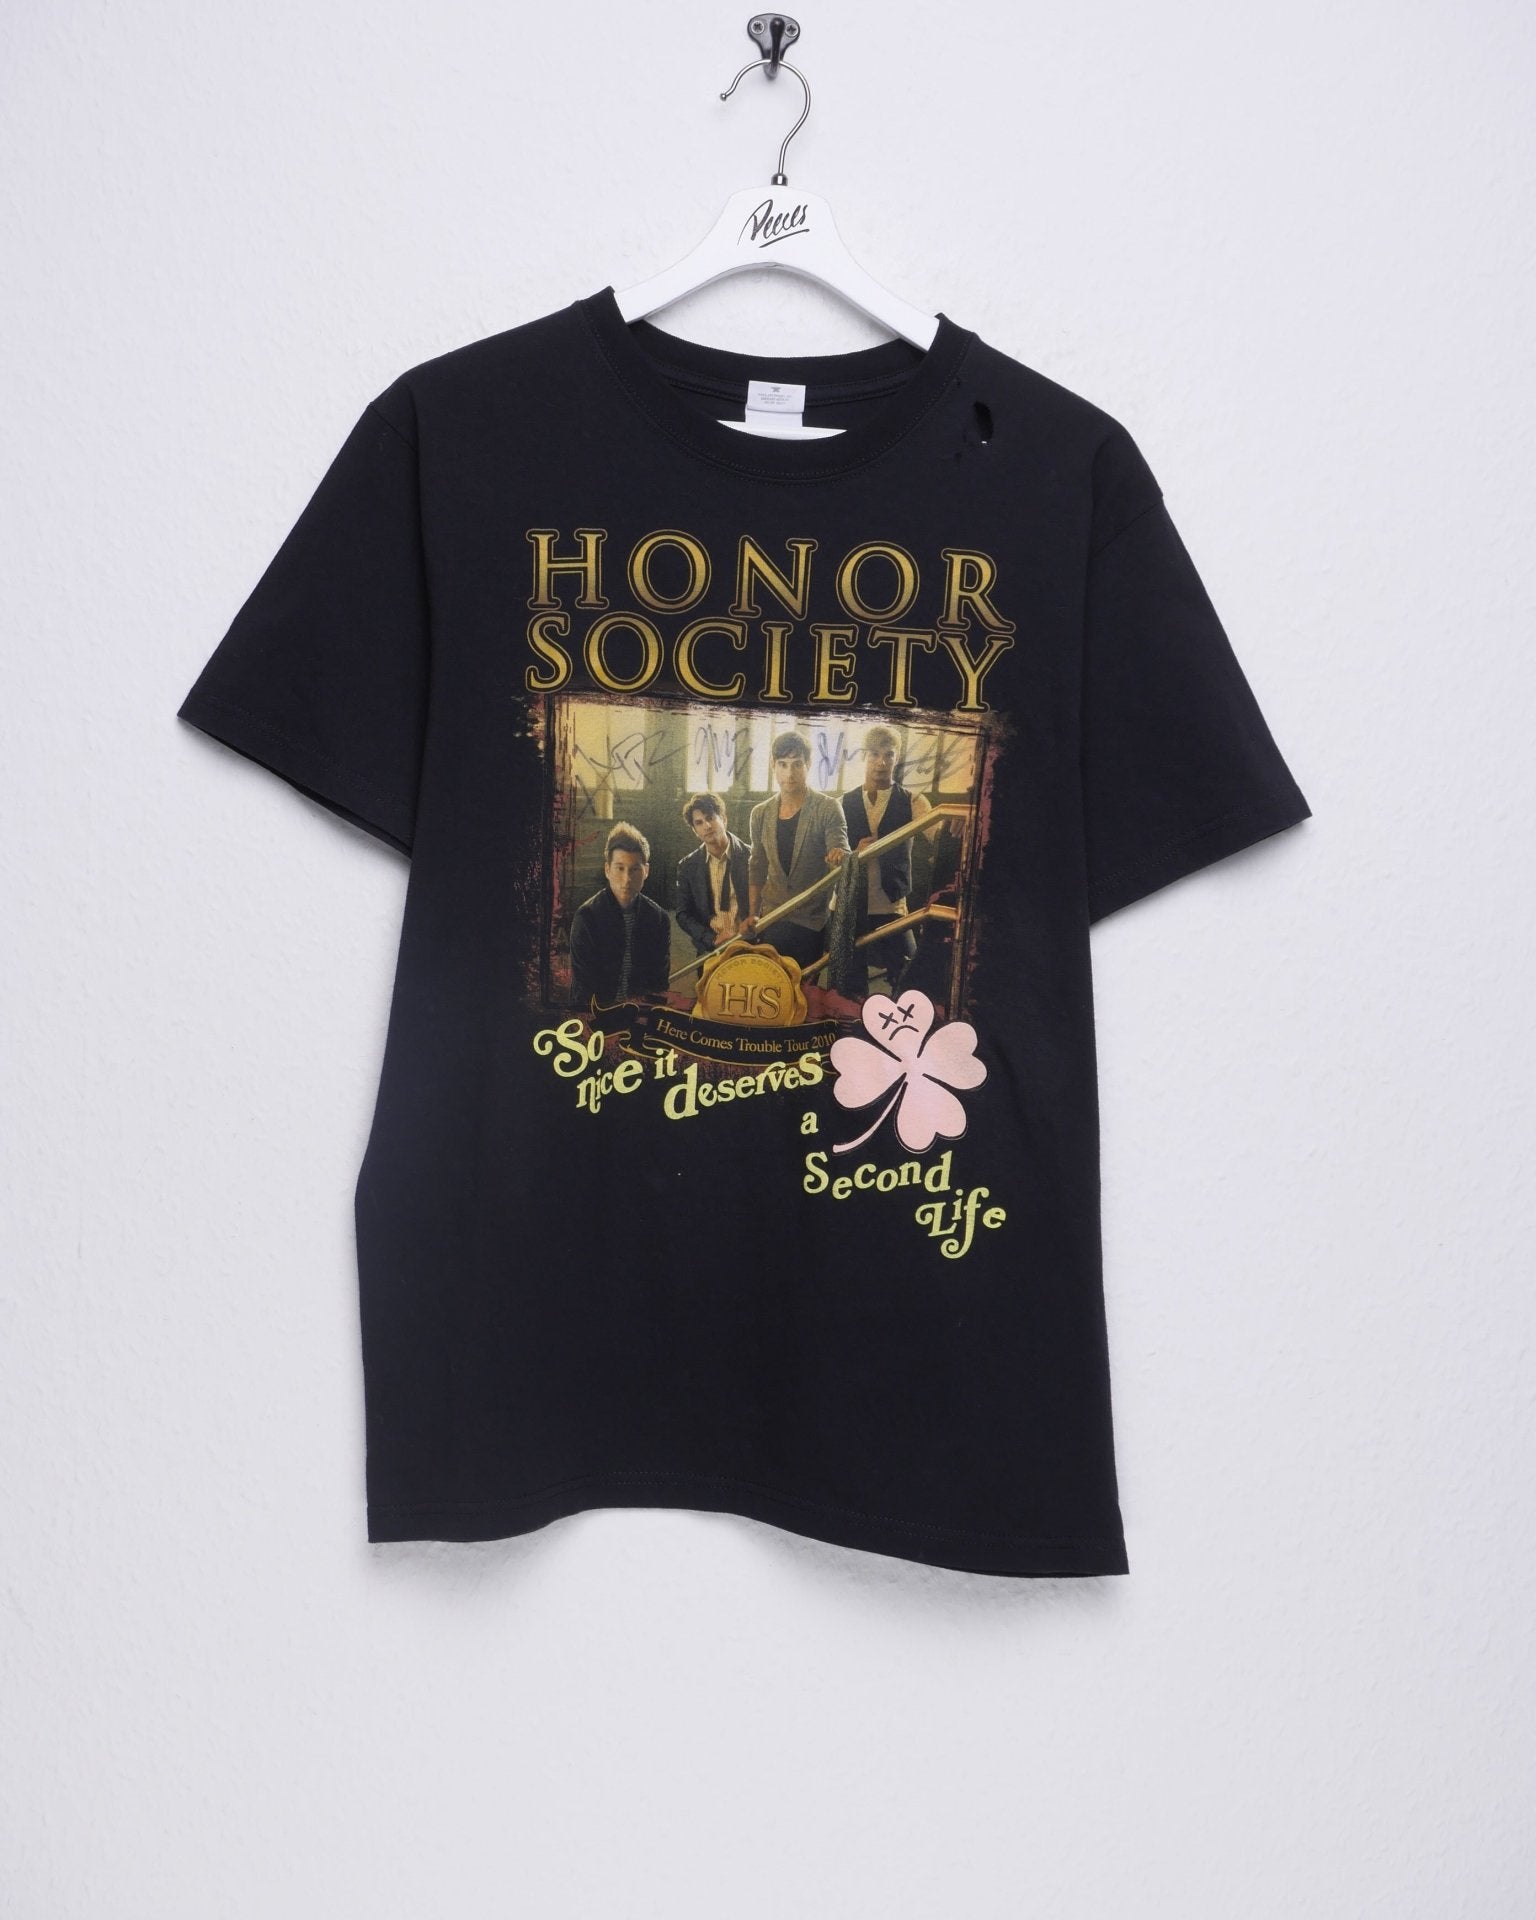 Peeces x Eamon Grey printed 'Honor Society' Band Graphic Shirt - Peeces